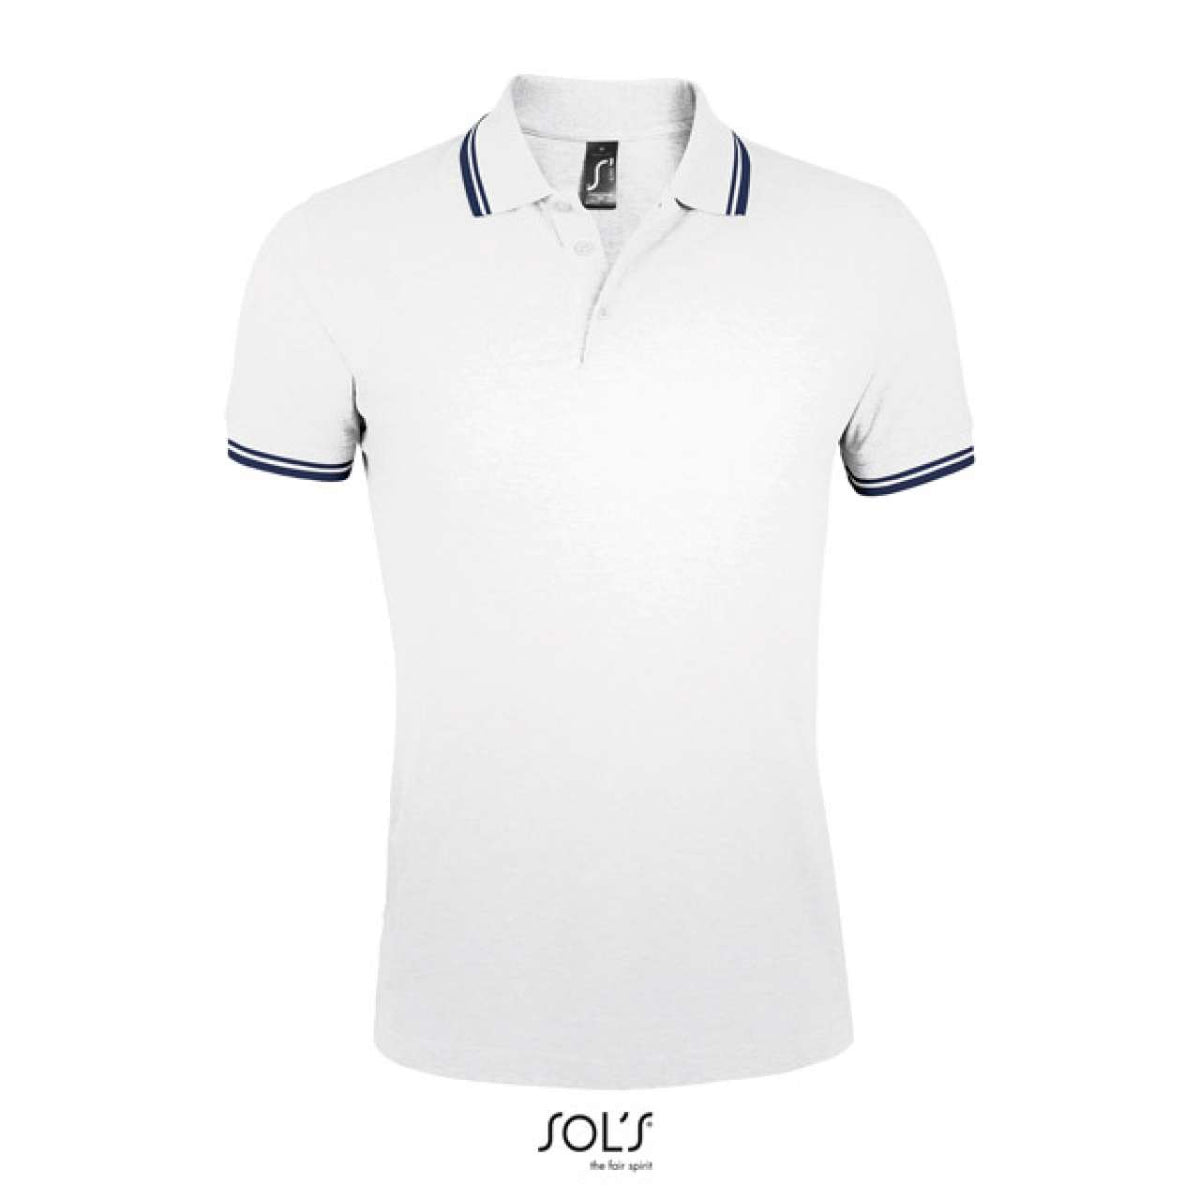 SOL'S Herren Polo-Shirt Polohemd Poloshirt Polo Shirt Shirt Freizeit